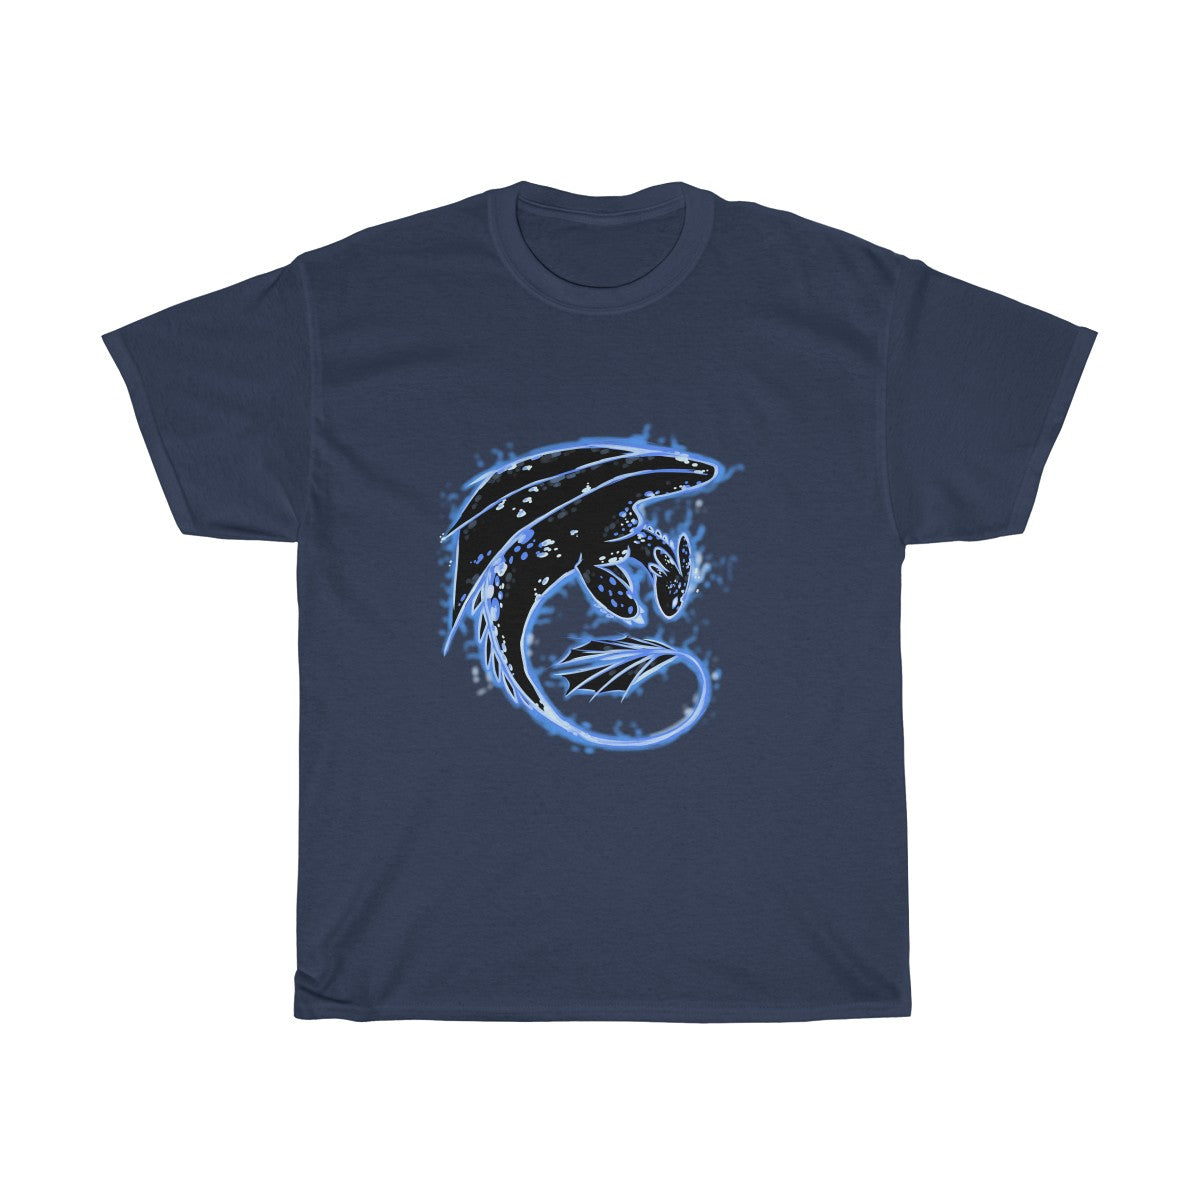 Blue Dragon - T-Shirt T-Shirt Dire Creatures Navy Blue S 